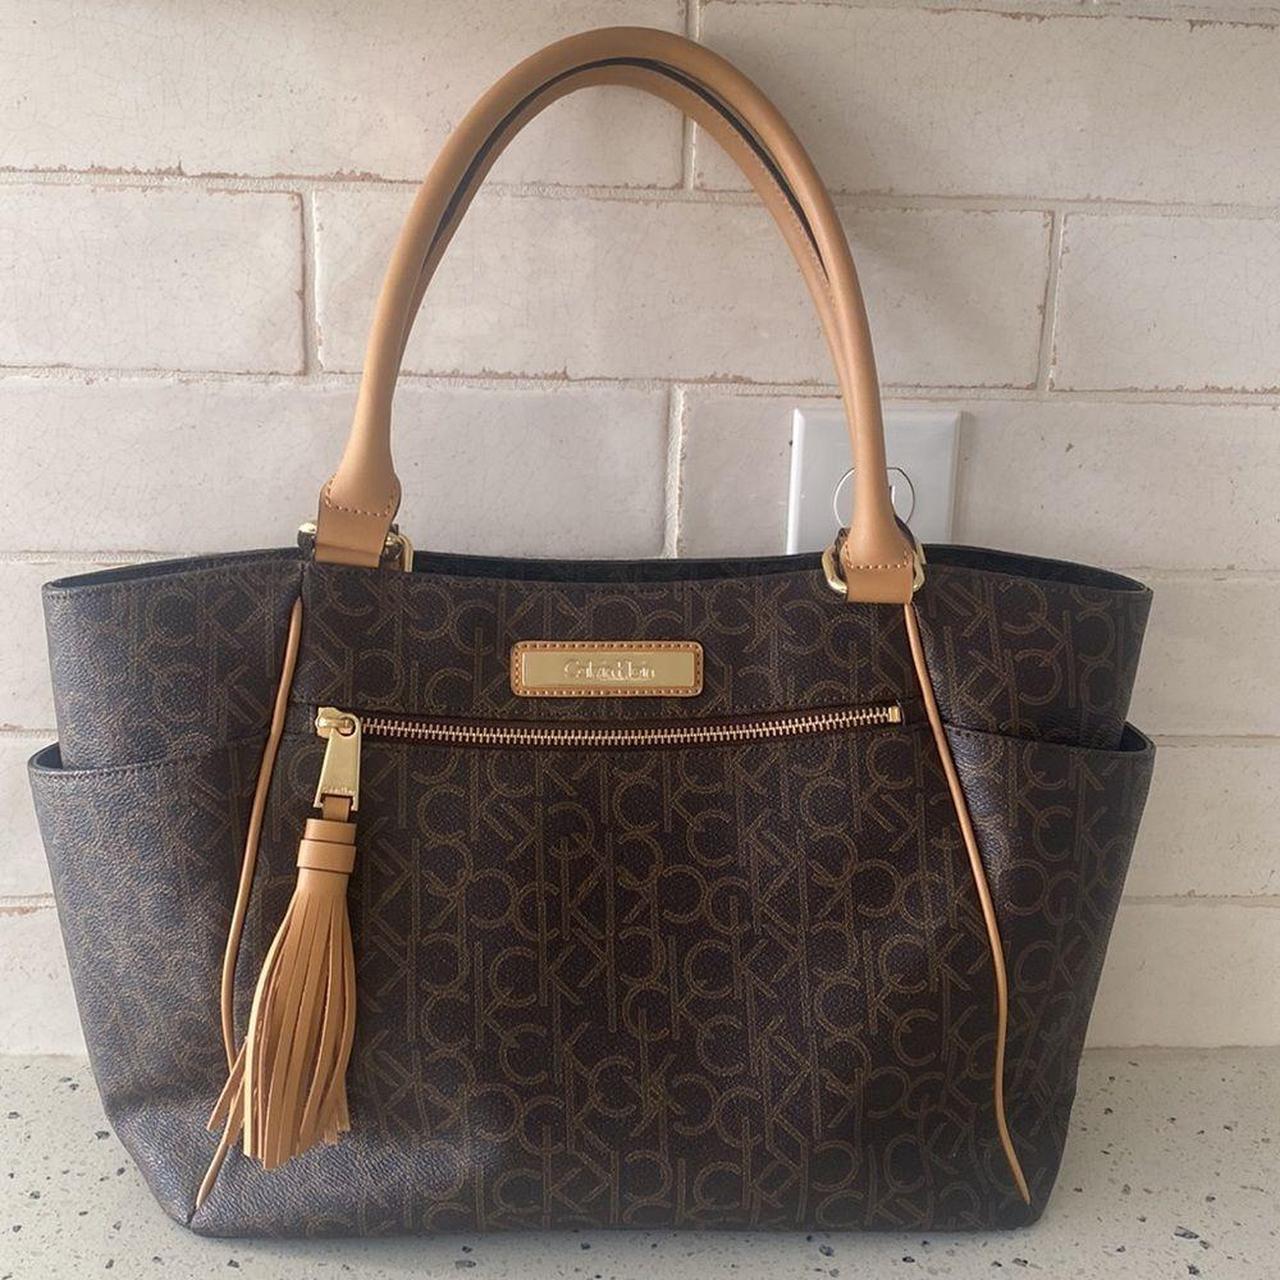 Genuine leather Calvin Klein purse. This purse has a... - Depop